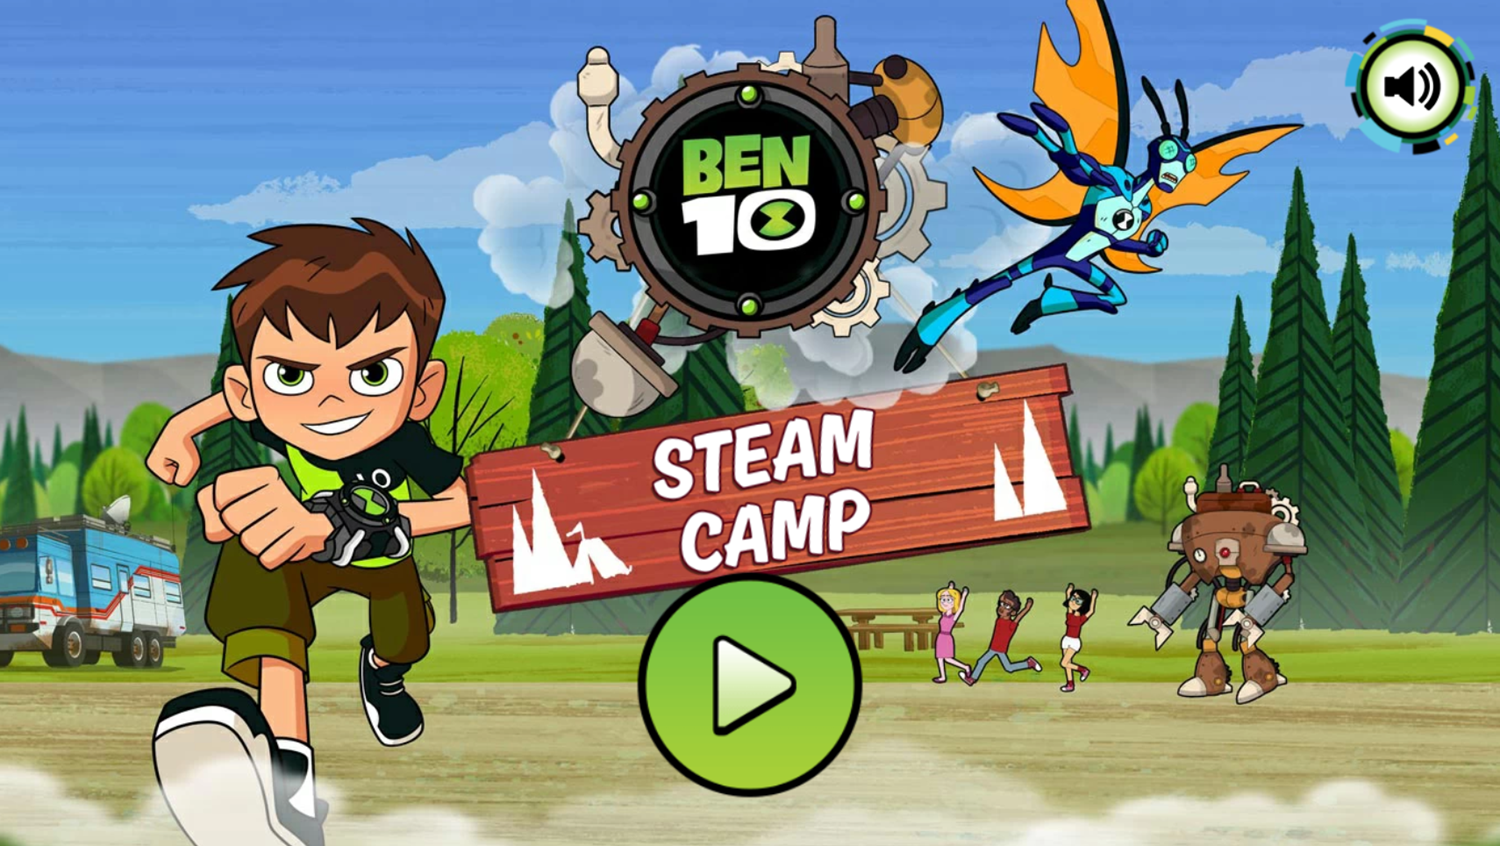 Ben 10 Steam Camp Game Welcome Screen Screenshot.